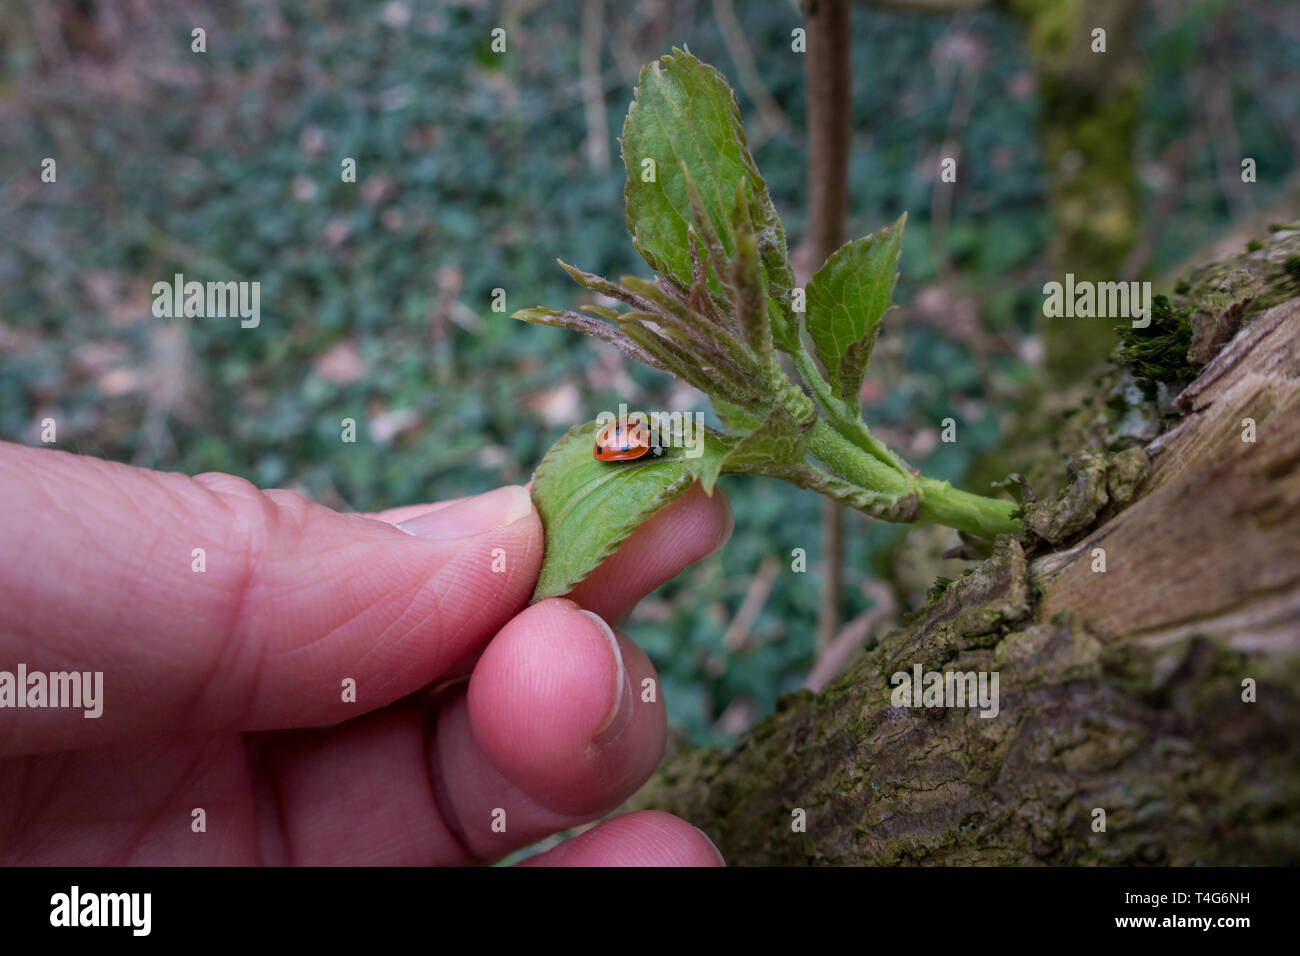 UK wildlife bug hunt: Handing holding a leaf to show a seven-spot ladybird - Coccinella septempunctata - coming out of hibernation, UK Stock Photo